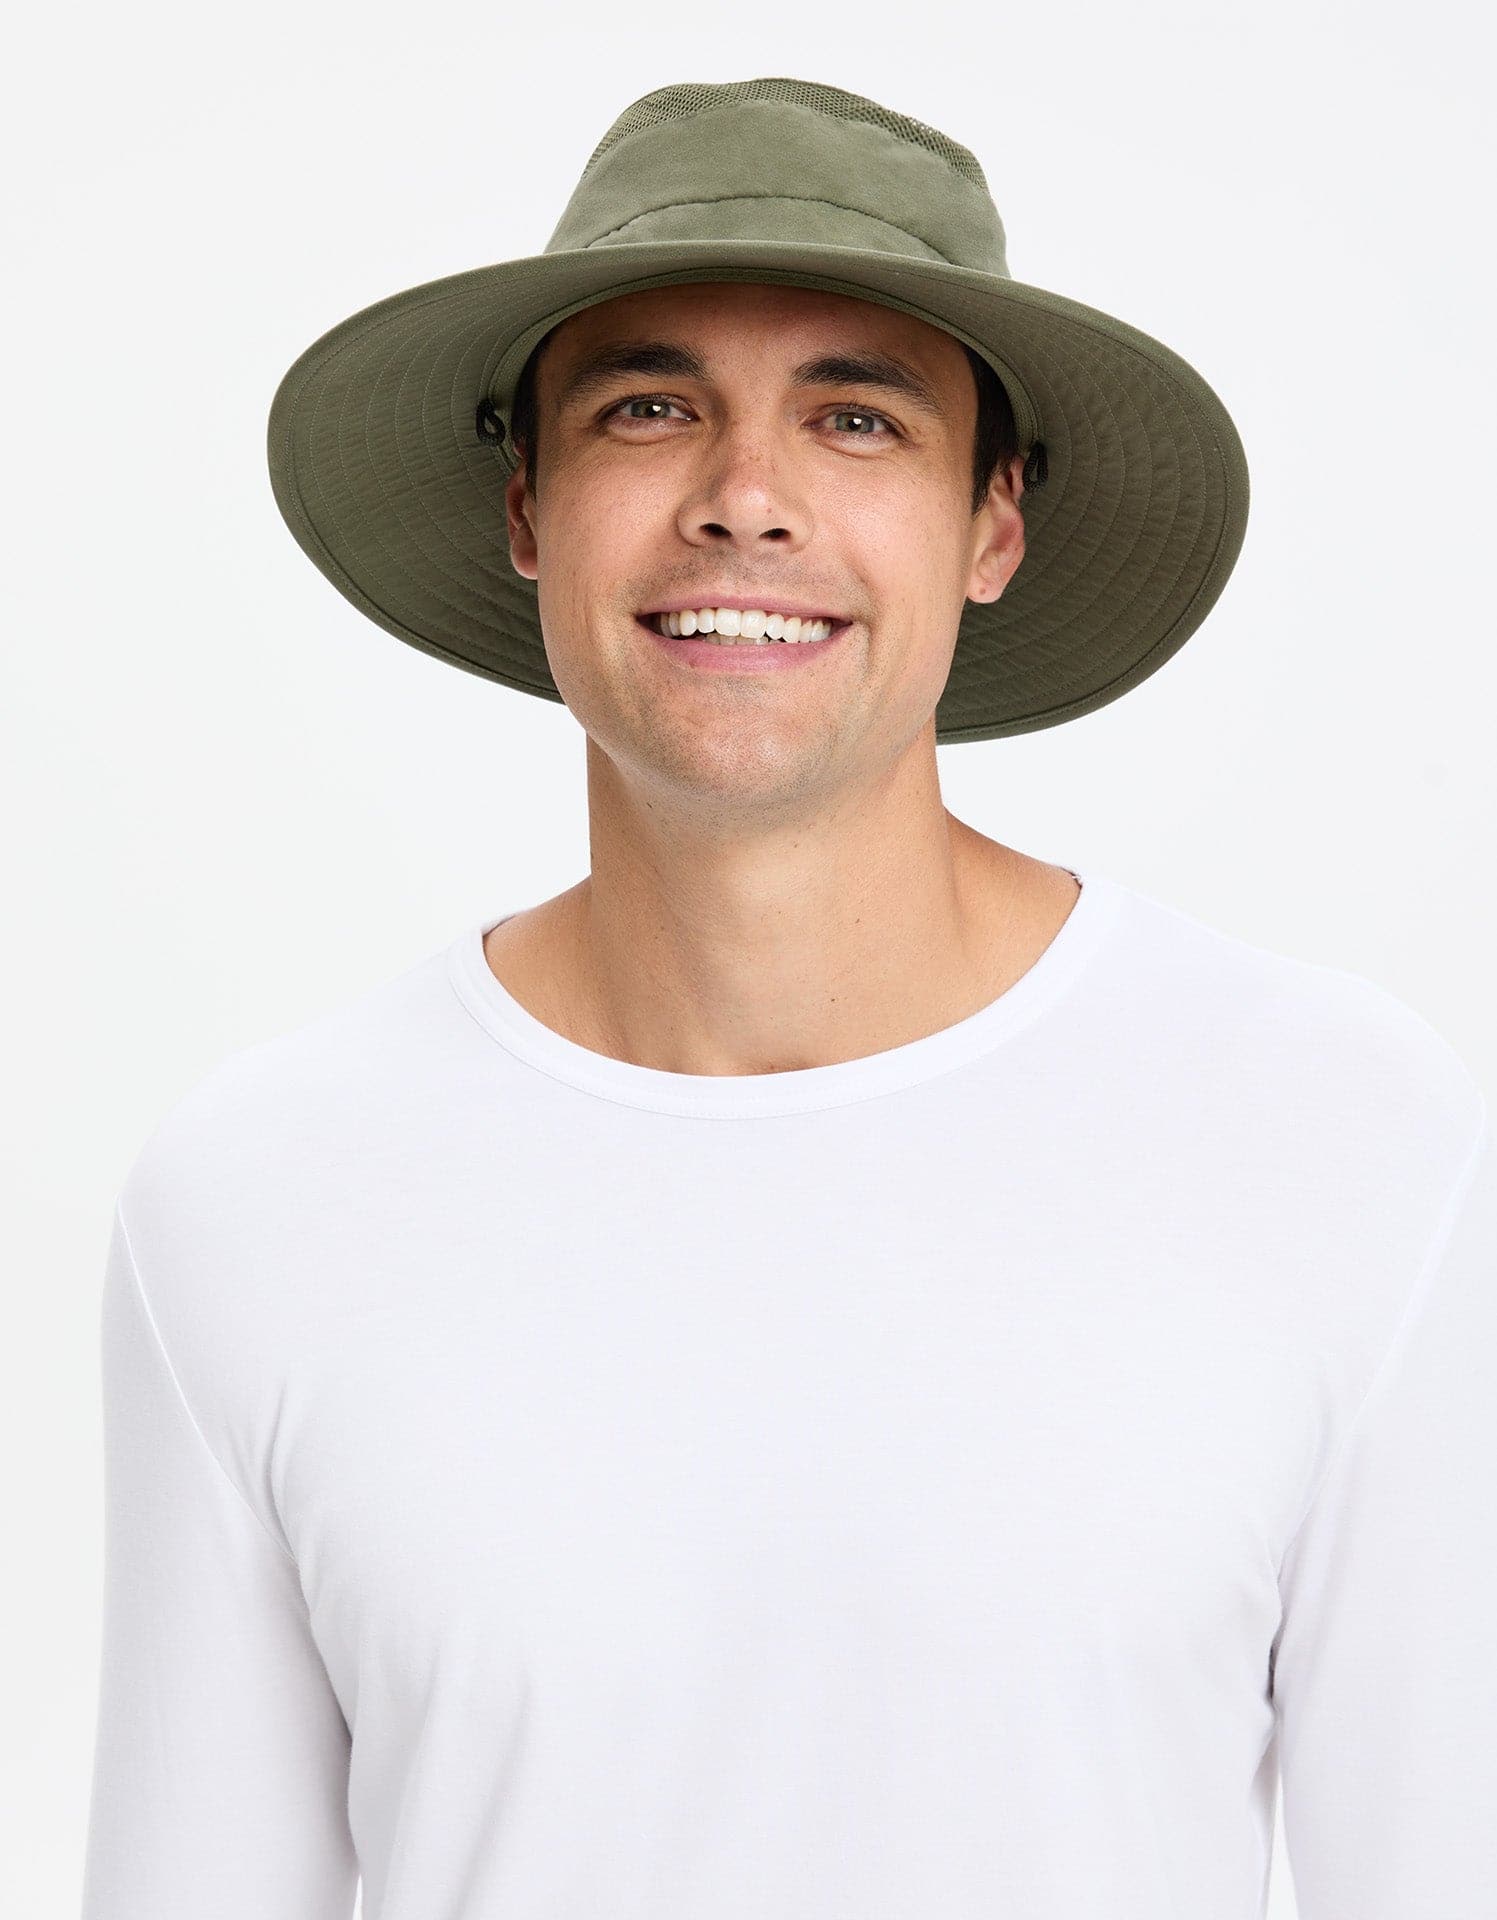  Gardening Hats For Men